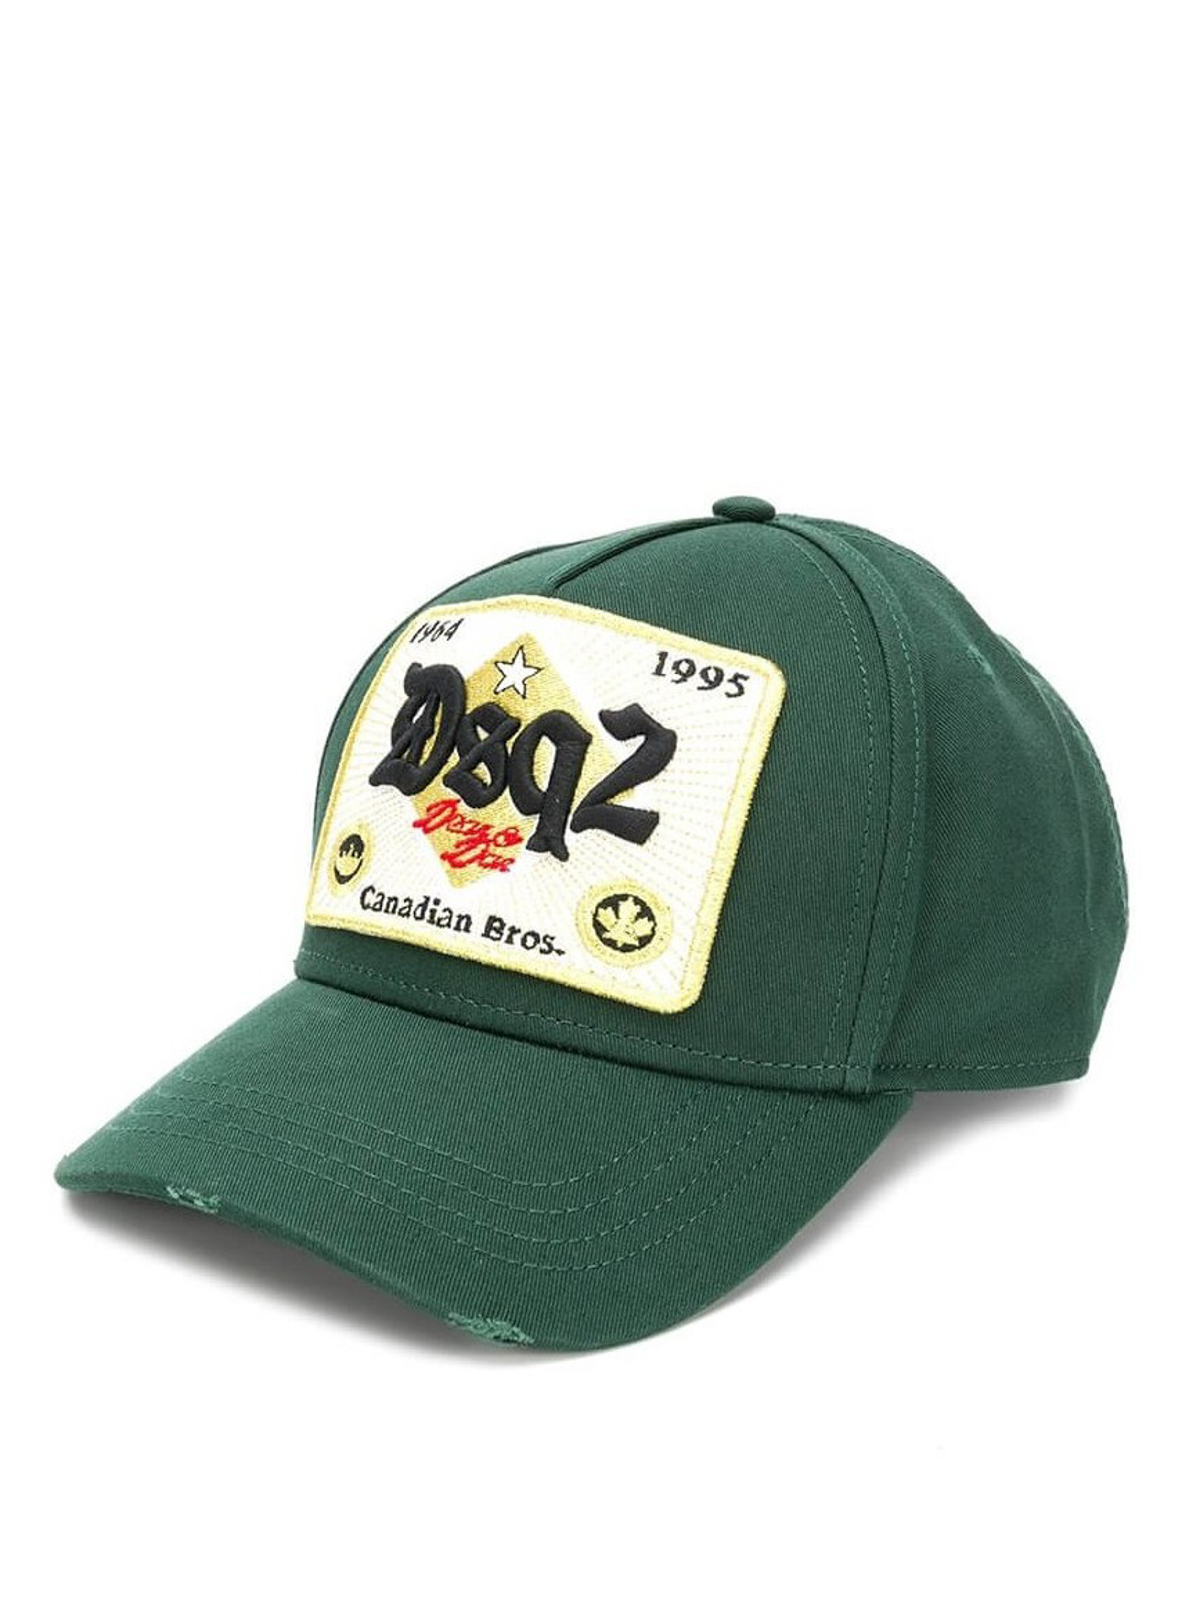 dsquared2 green cap